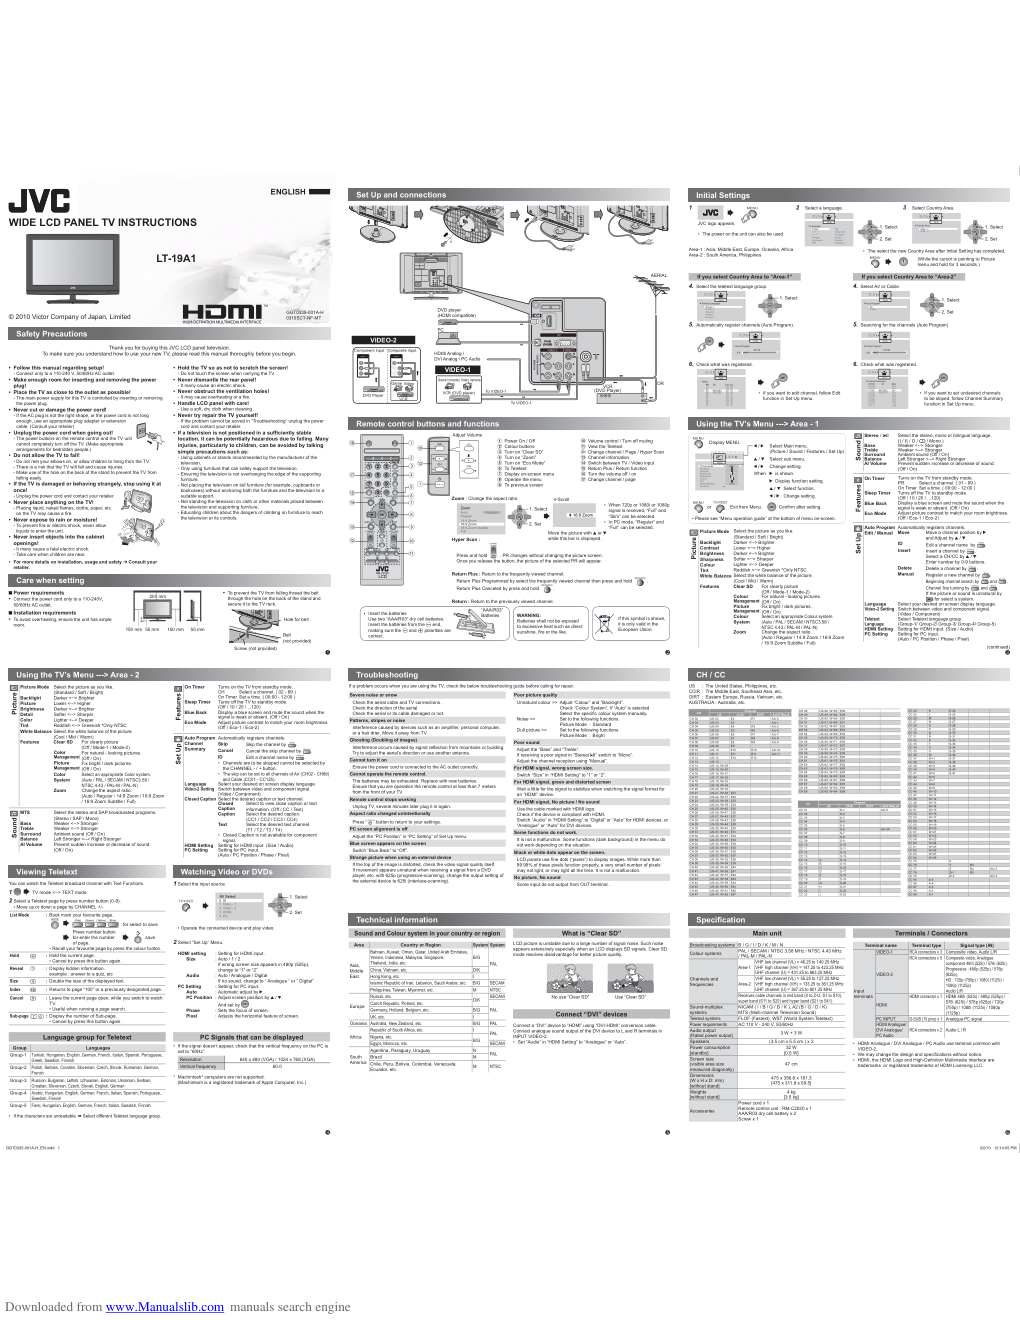 JVC胜利LT-19A1液晶电视使用手册-0